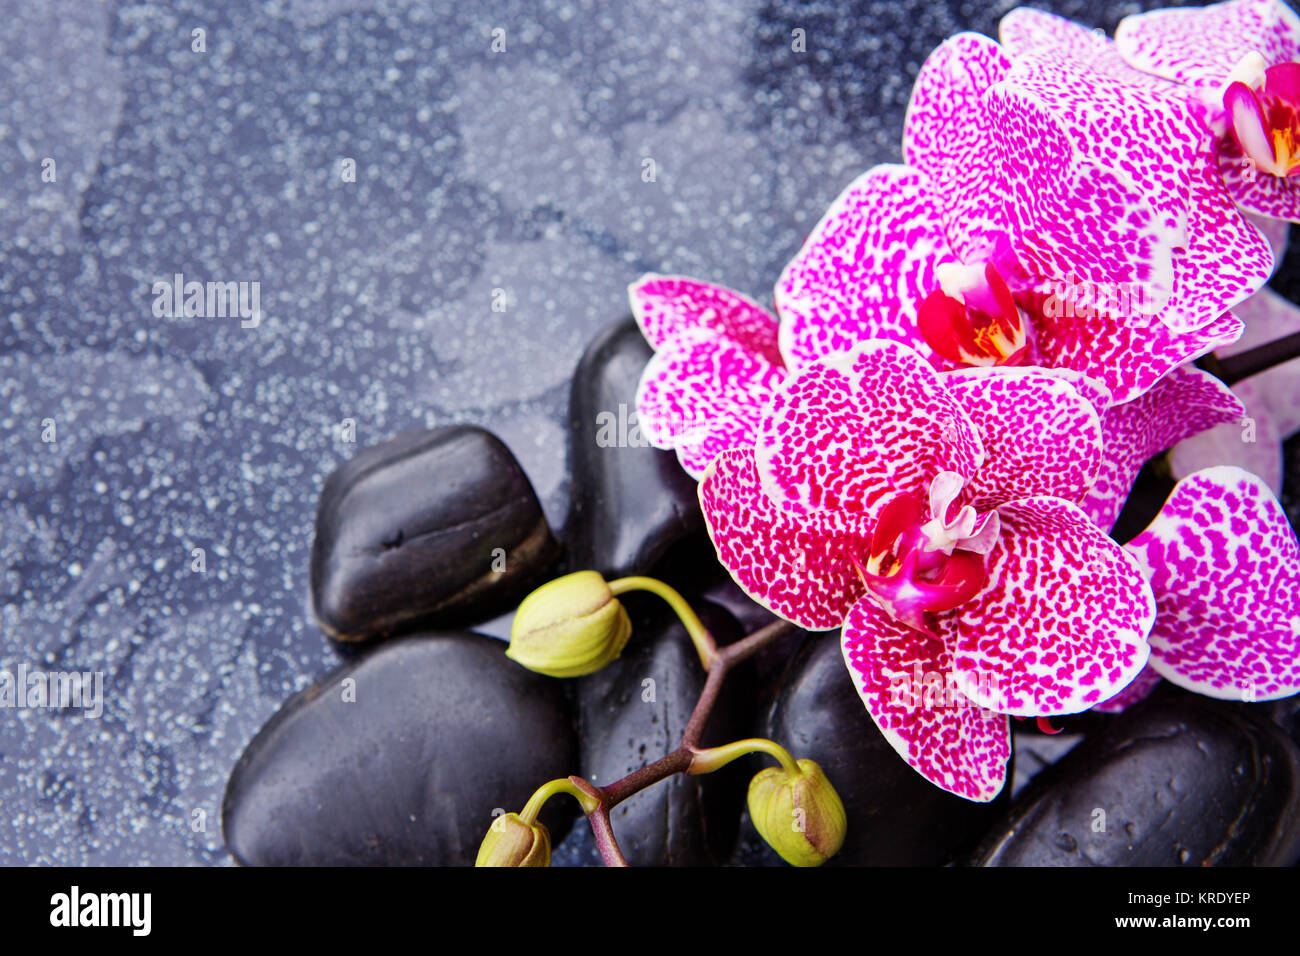 Fondos de pantalla de orquídeas fotografías e imágenes de alta resolución -  Alamy